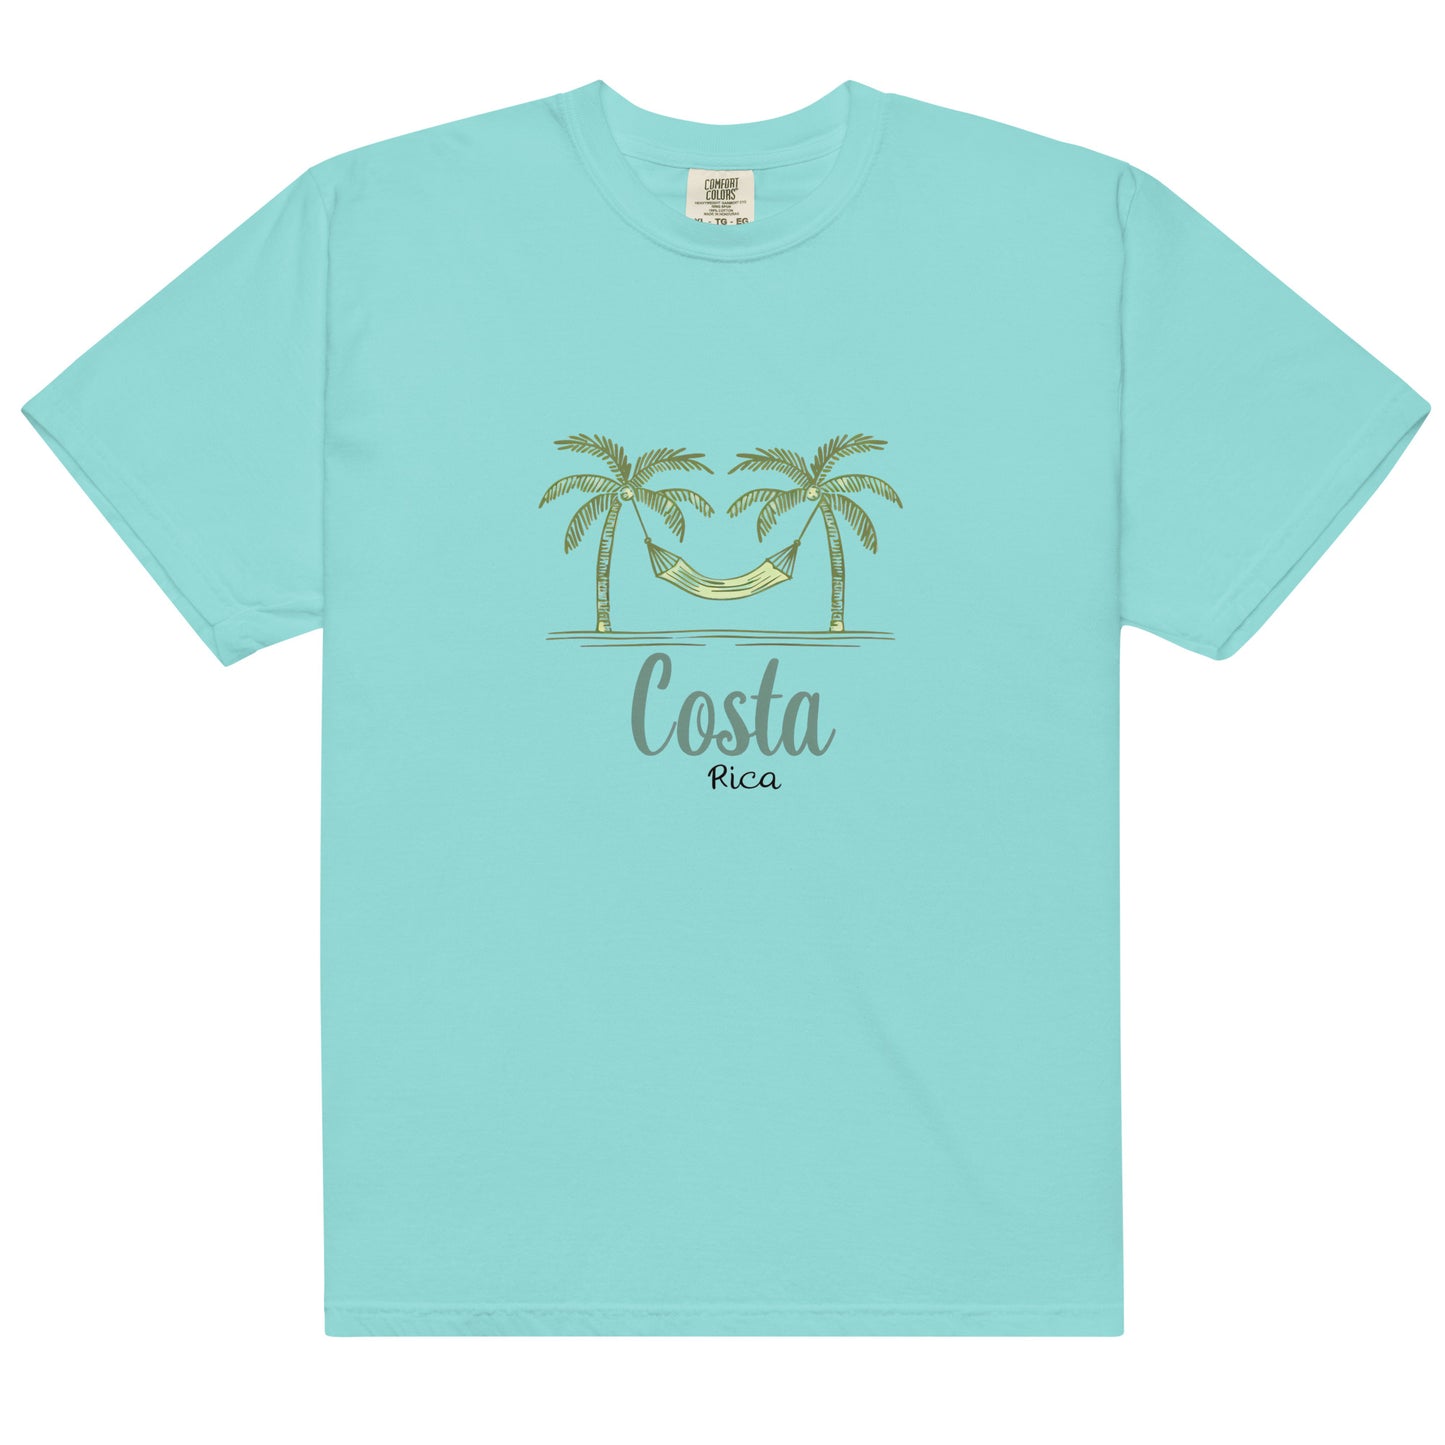 Costa Rica Hammock t-shirt - Unisex